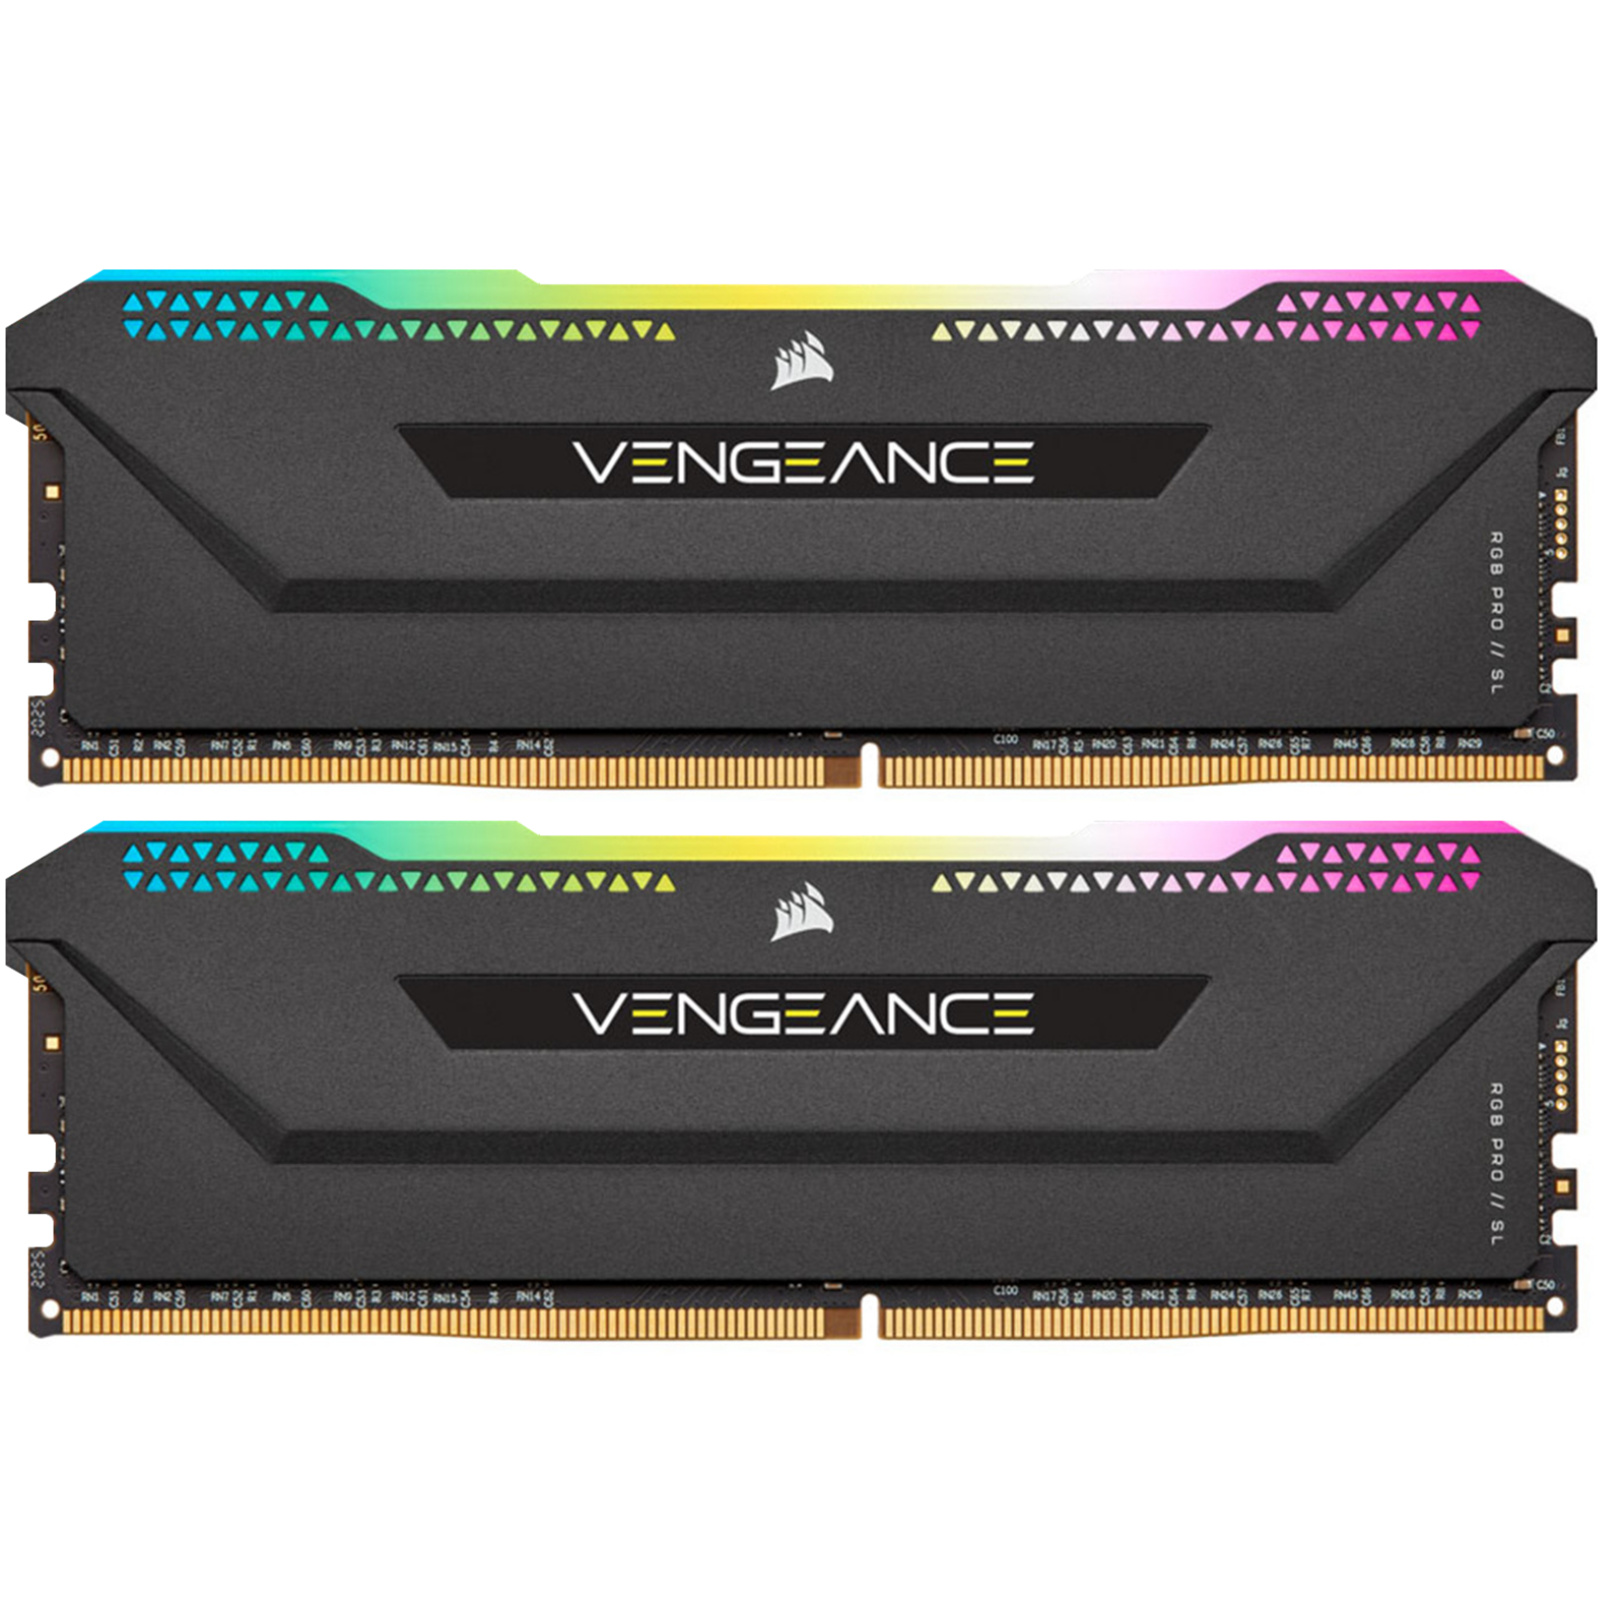 Corsair Vengeance RGB PRO SL 16GB (2x8GB) DDR4 3200Mhz C16 Black Heatspreader Desktop Gaming Memory